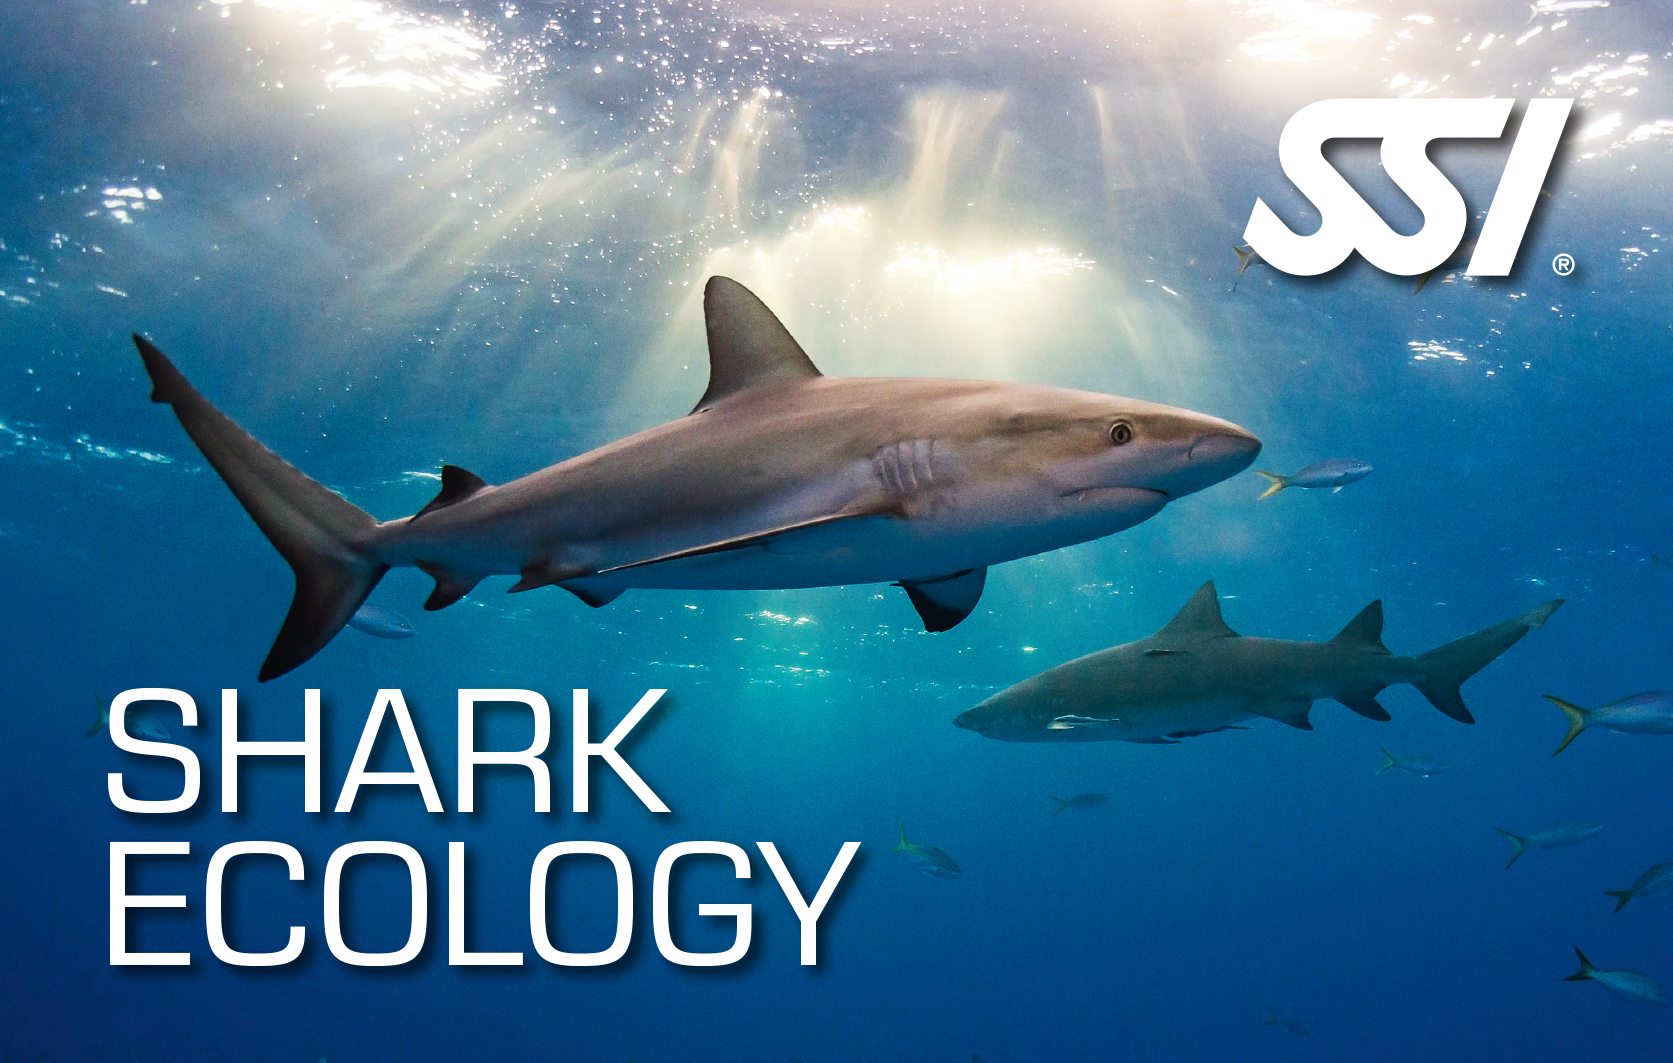 SSI Shark Ecology | SSI Shark Ecology Course | Shark Ecology | Specialty Course | Diving Course